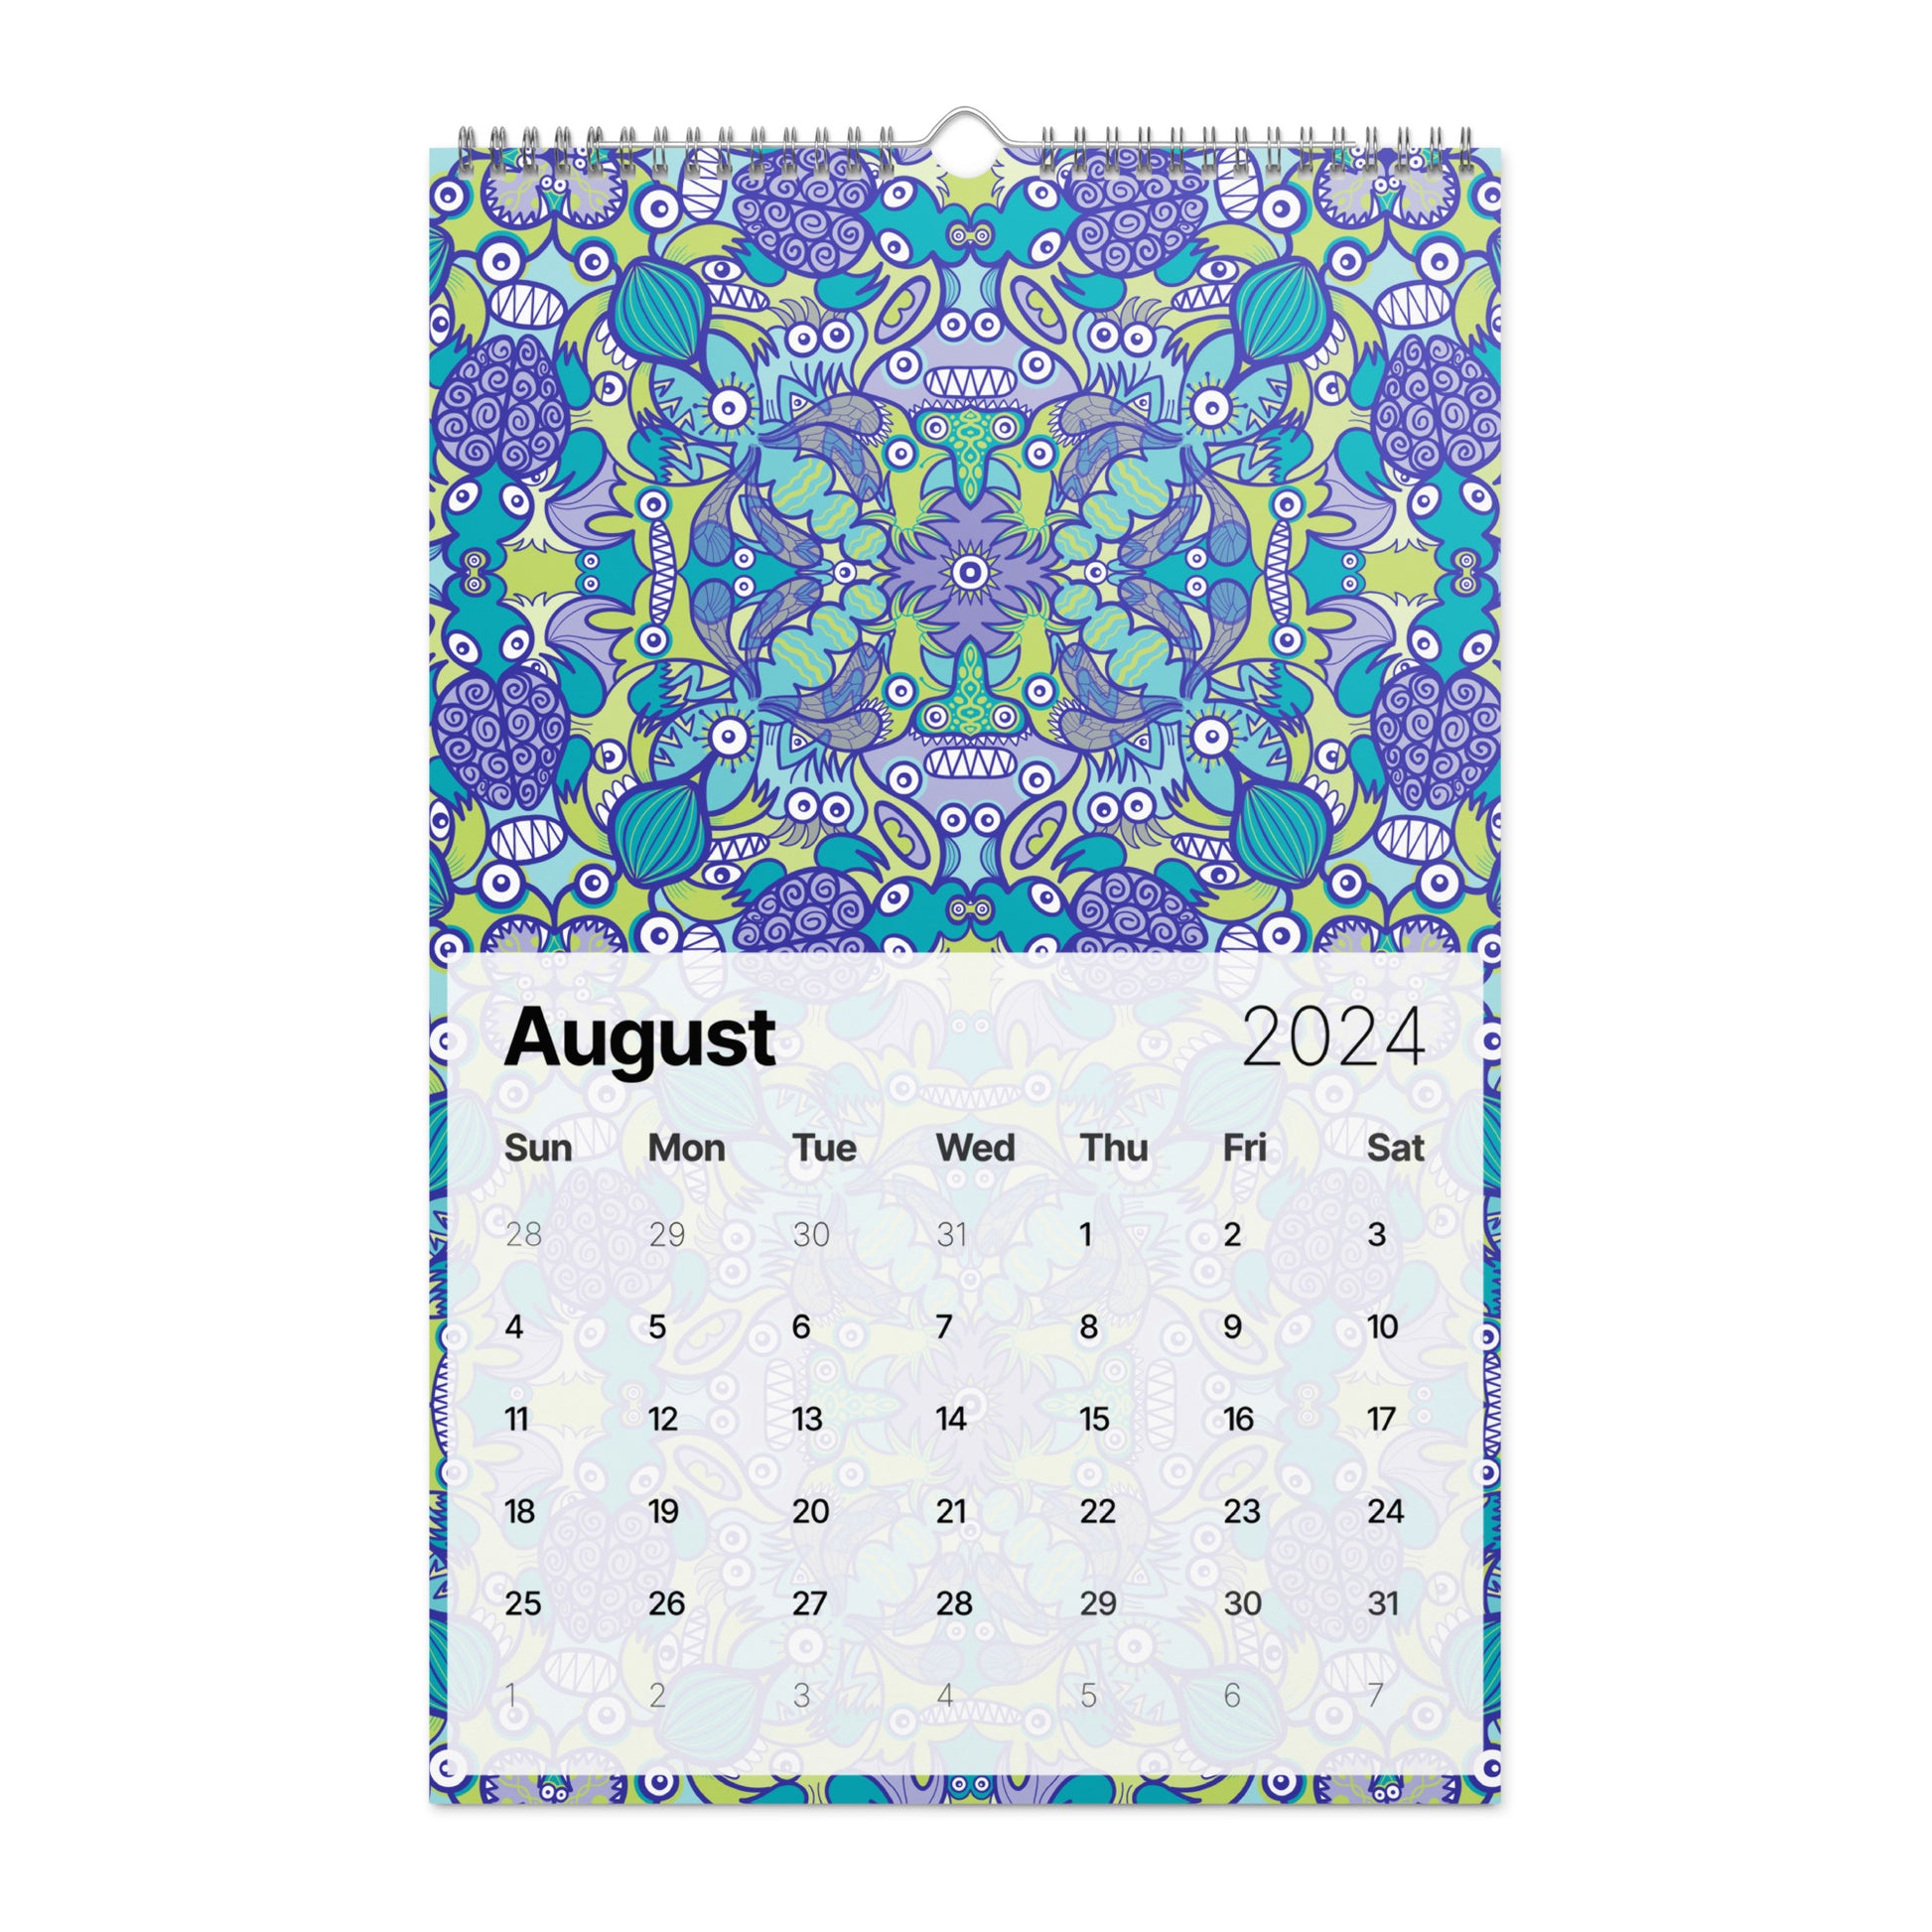 Zoo&co’s Doodle Art Wall calendar (2024). 11 x 17. August